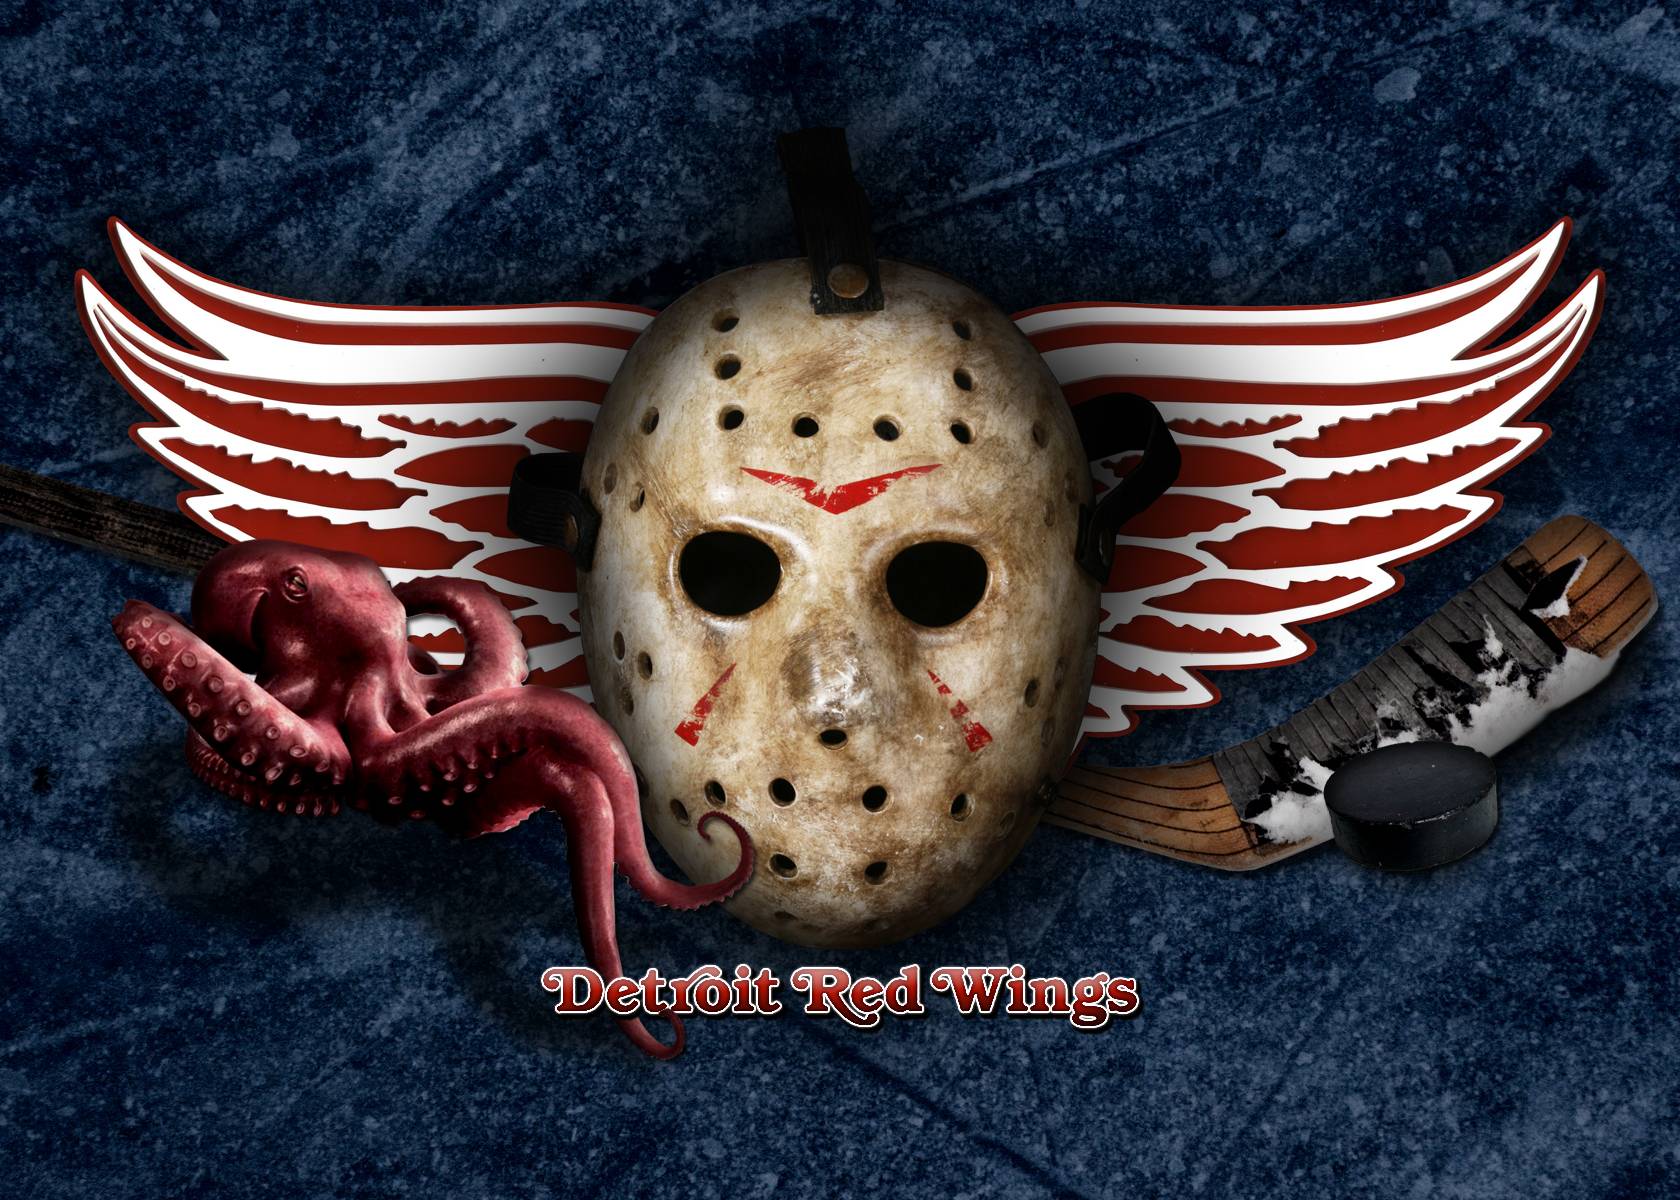 Free Detroit Red Wings desktop image